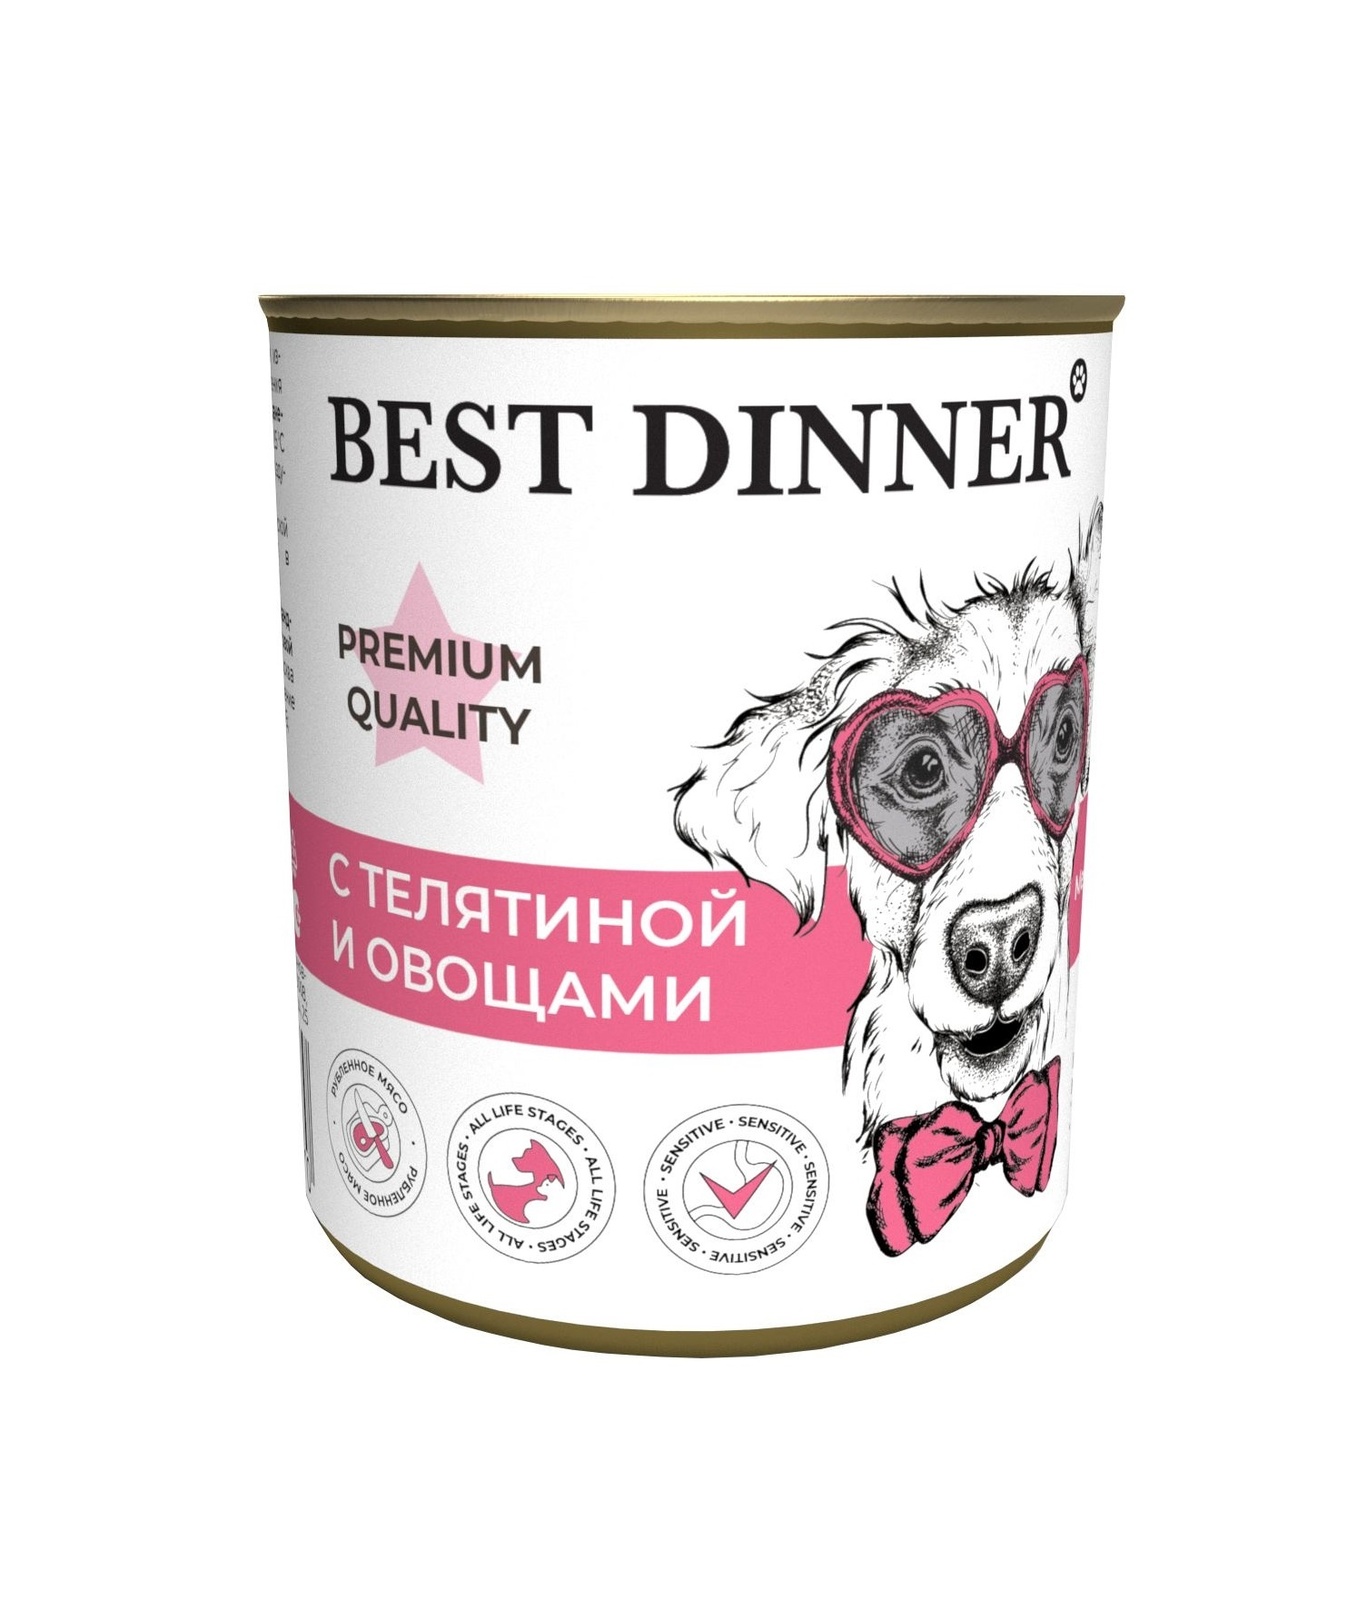 Best Dinner Best Dinner консервы Premium меню №4: С телятиной и овощами (340 г) best dinner best dinner консервы для щенков premium меню 1 с ягненком 340 г